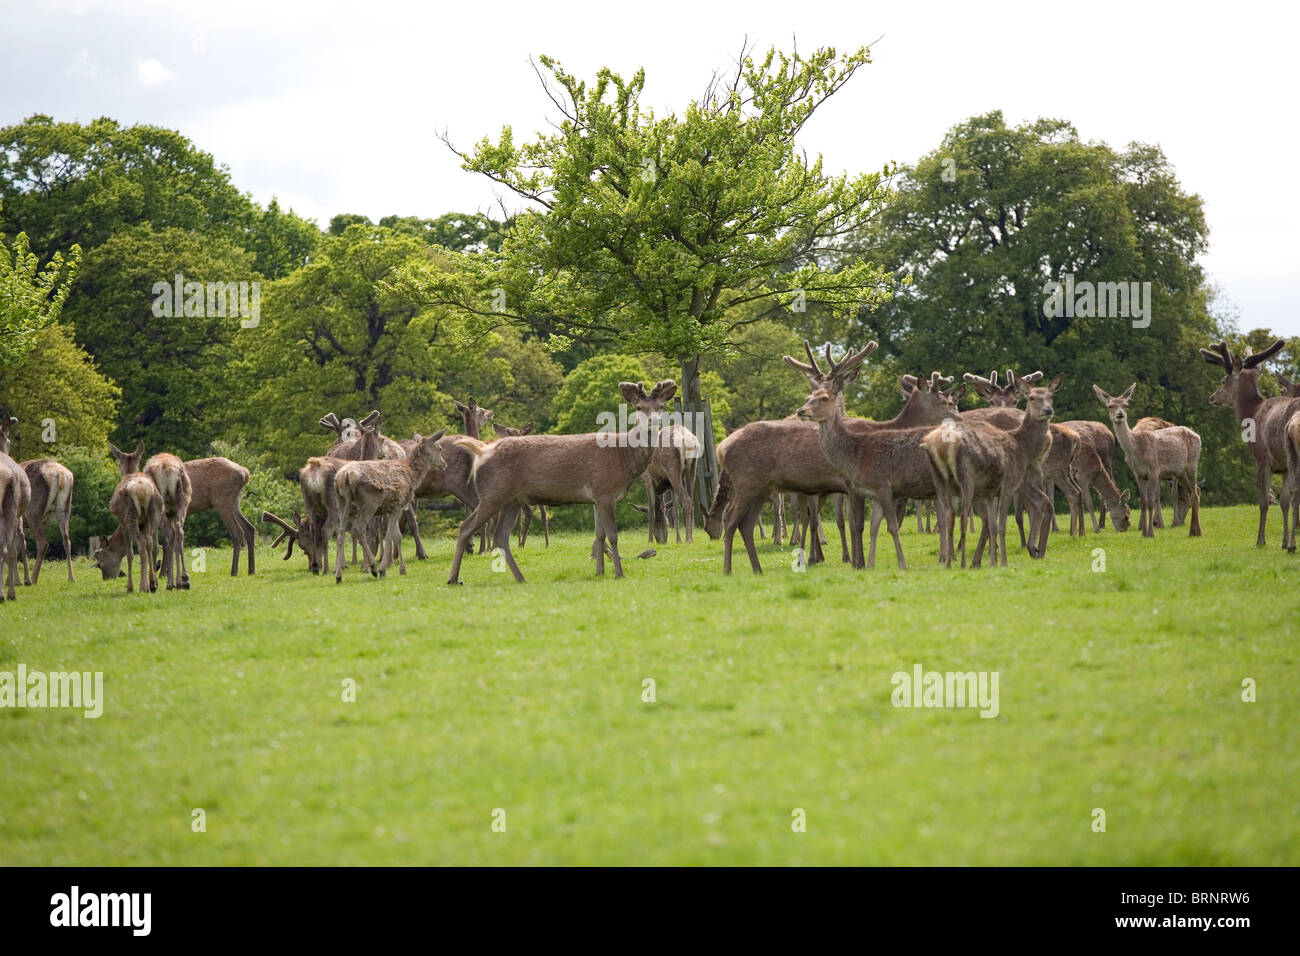 Deer Richmond Park animals nature group herd wild Stock Photo